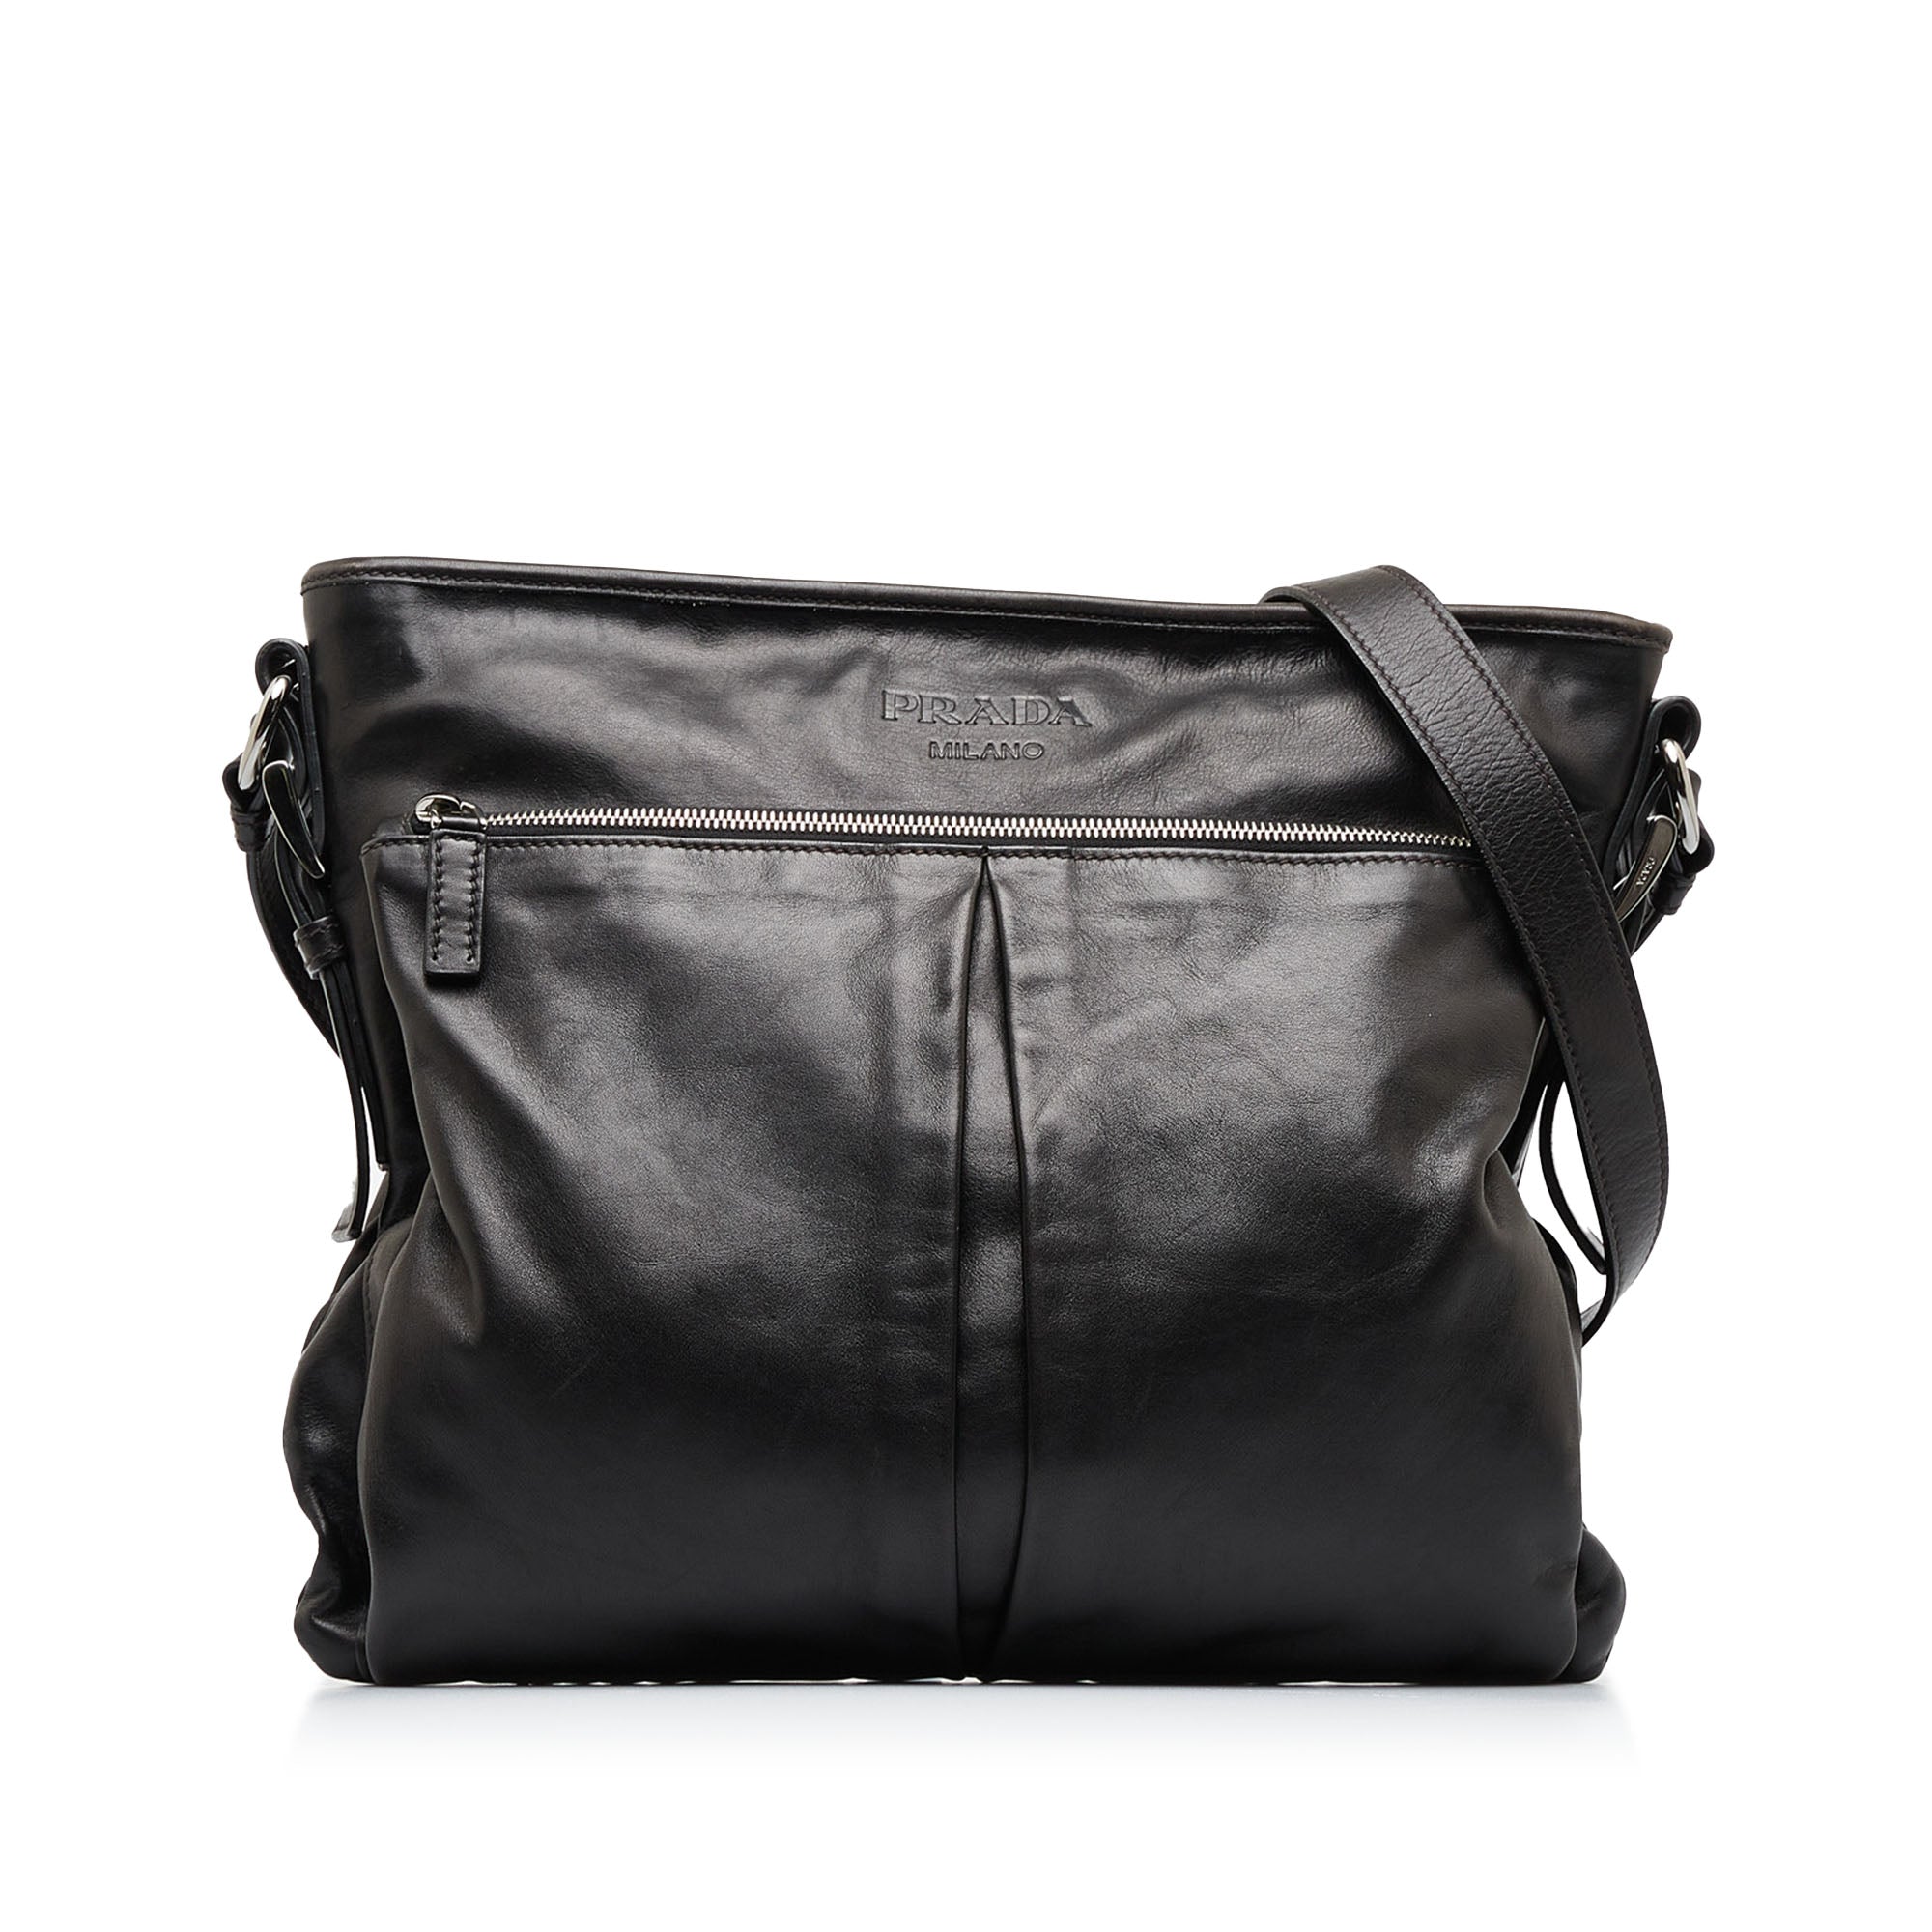 Prada Patent Leather Handbag